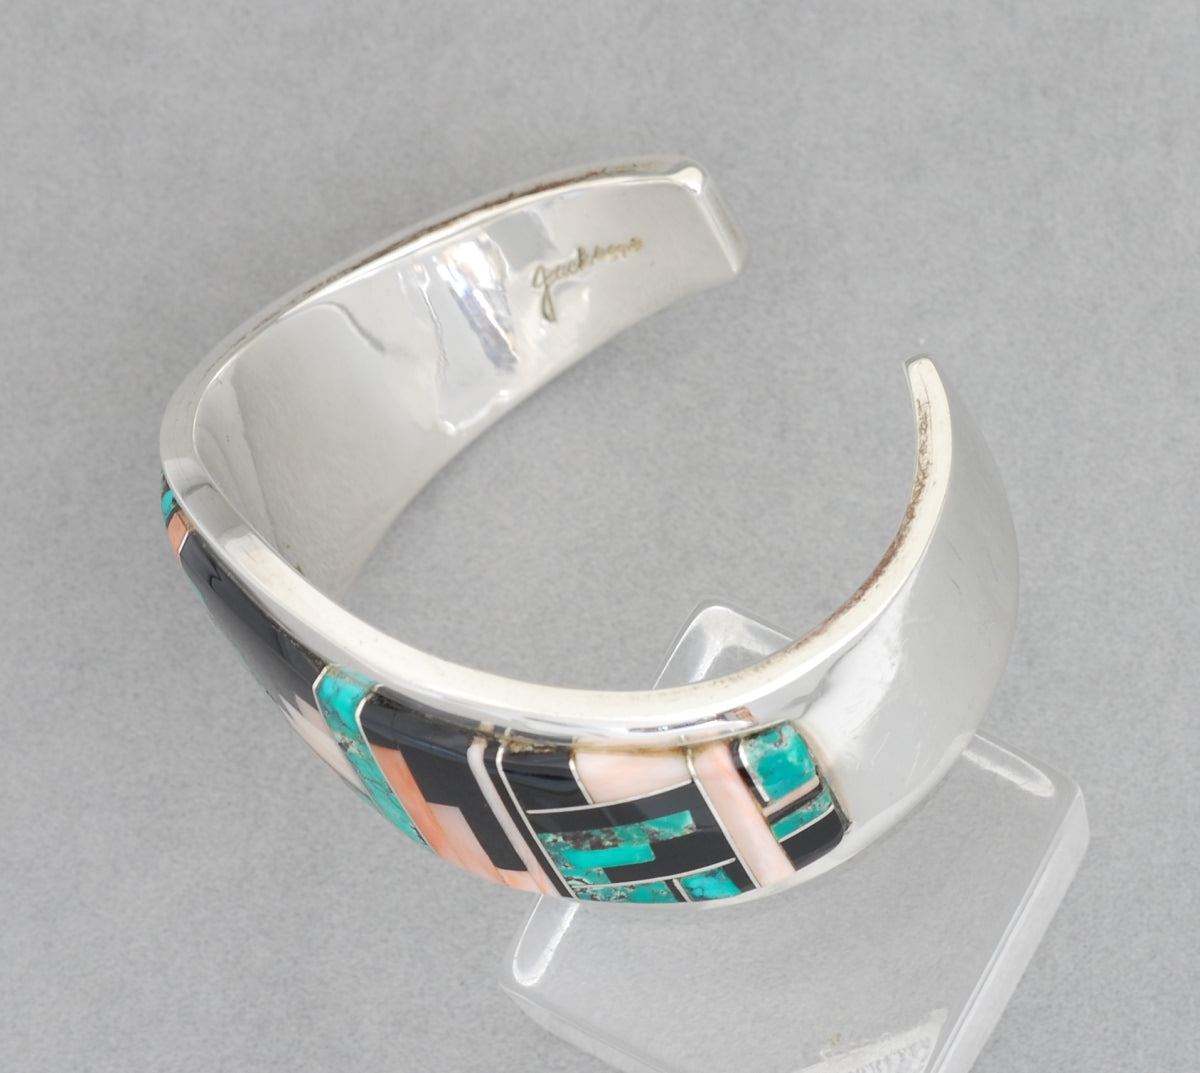 Mosaic Inlay Cuff Bracelet by Tommy Jackson